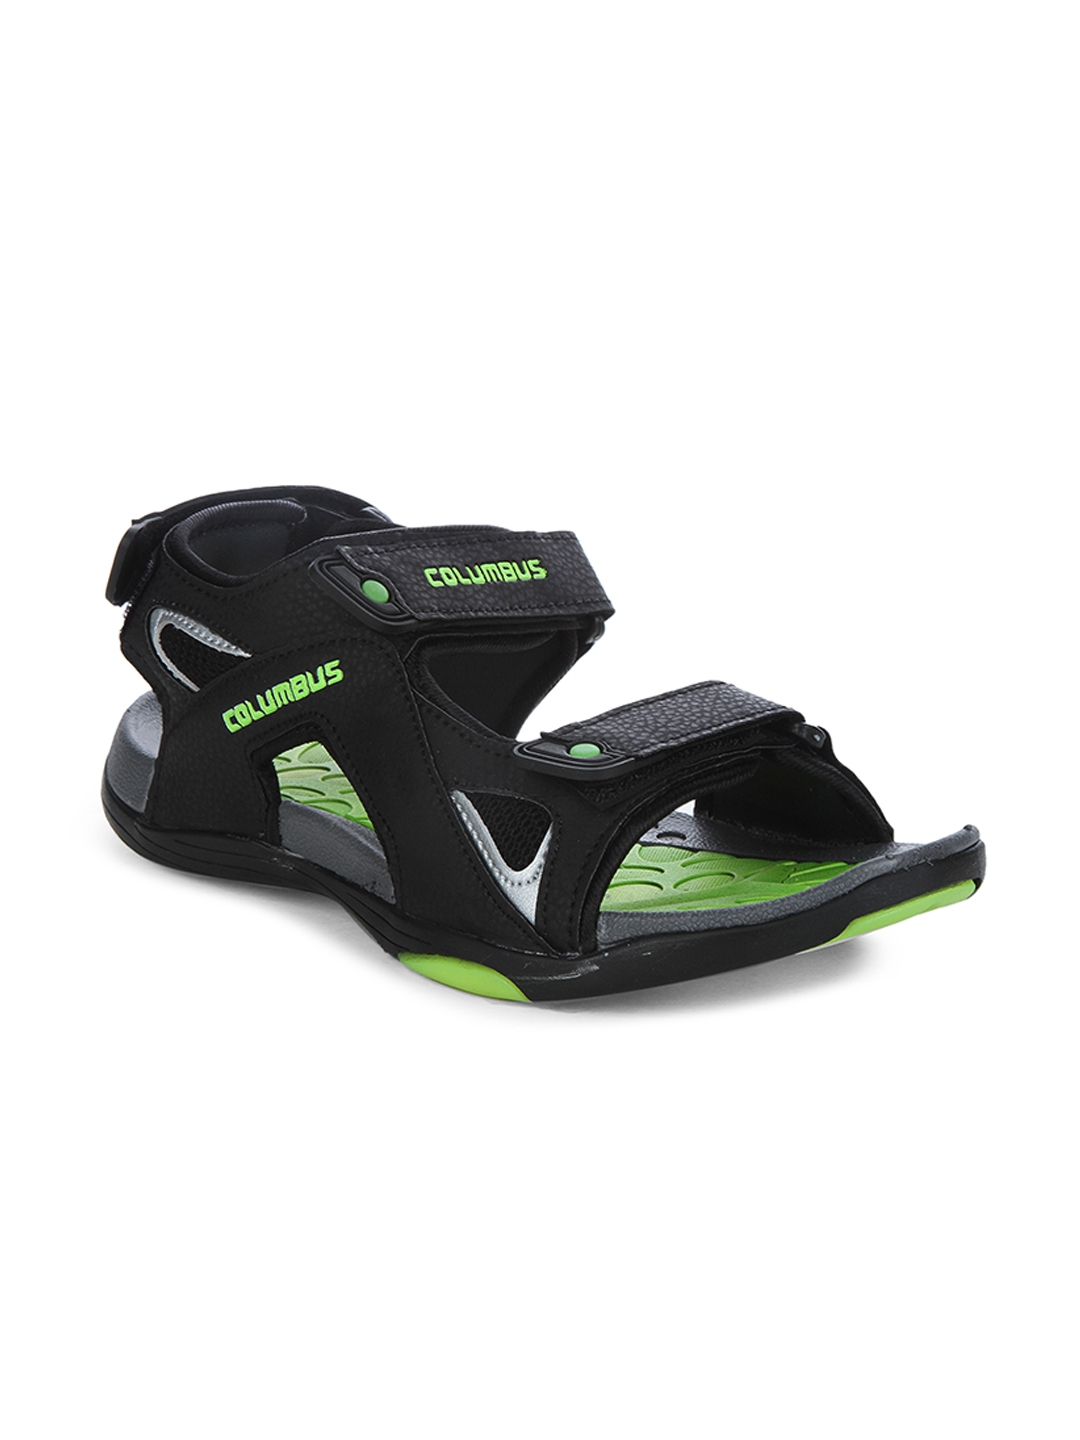 Buy Columbus Green & Black Sports Sandals - Sports Sandals for Men 6748124 | Myntra